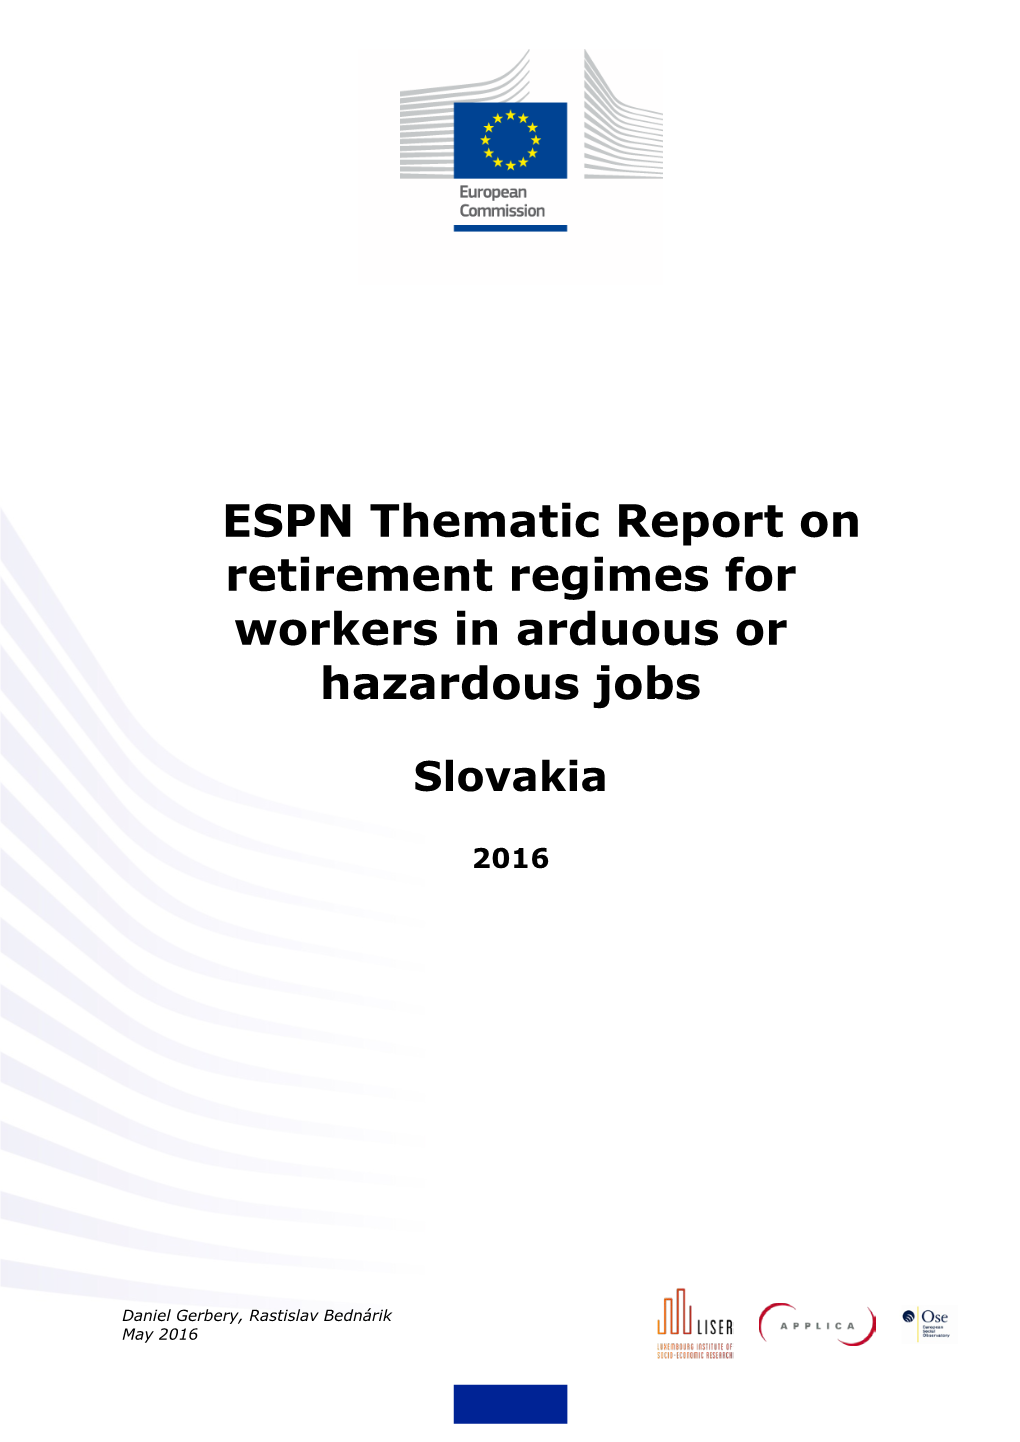 ESPN Thematic Report on Retirement Regimes for Workers in Arduous Or Hazardous Jobs